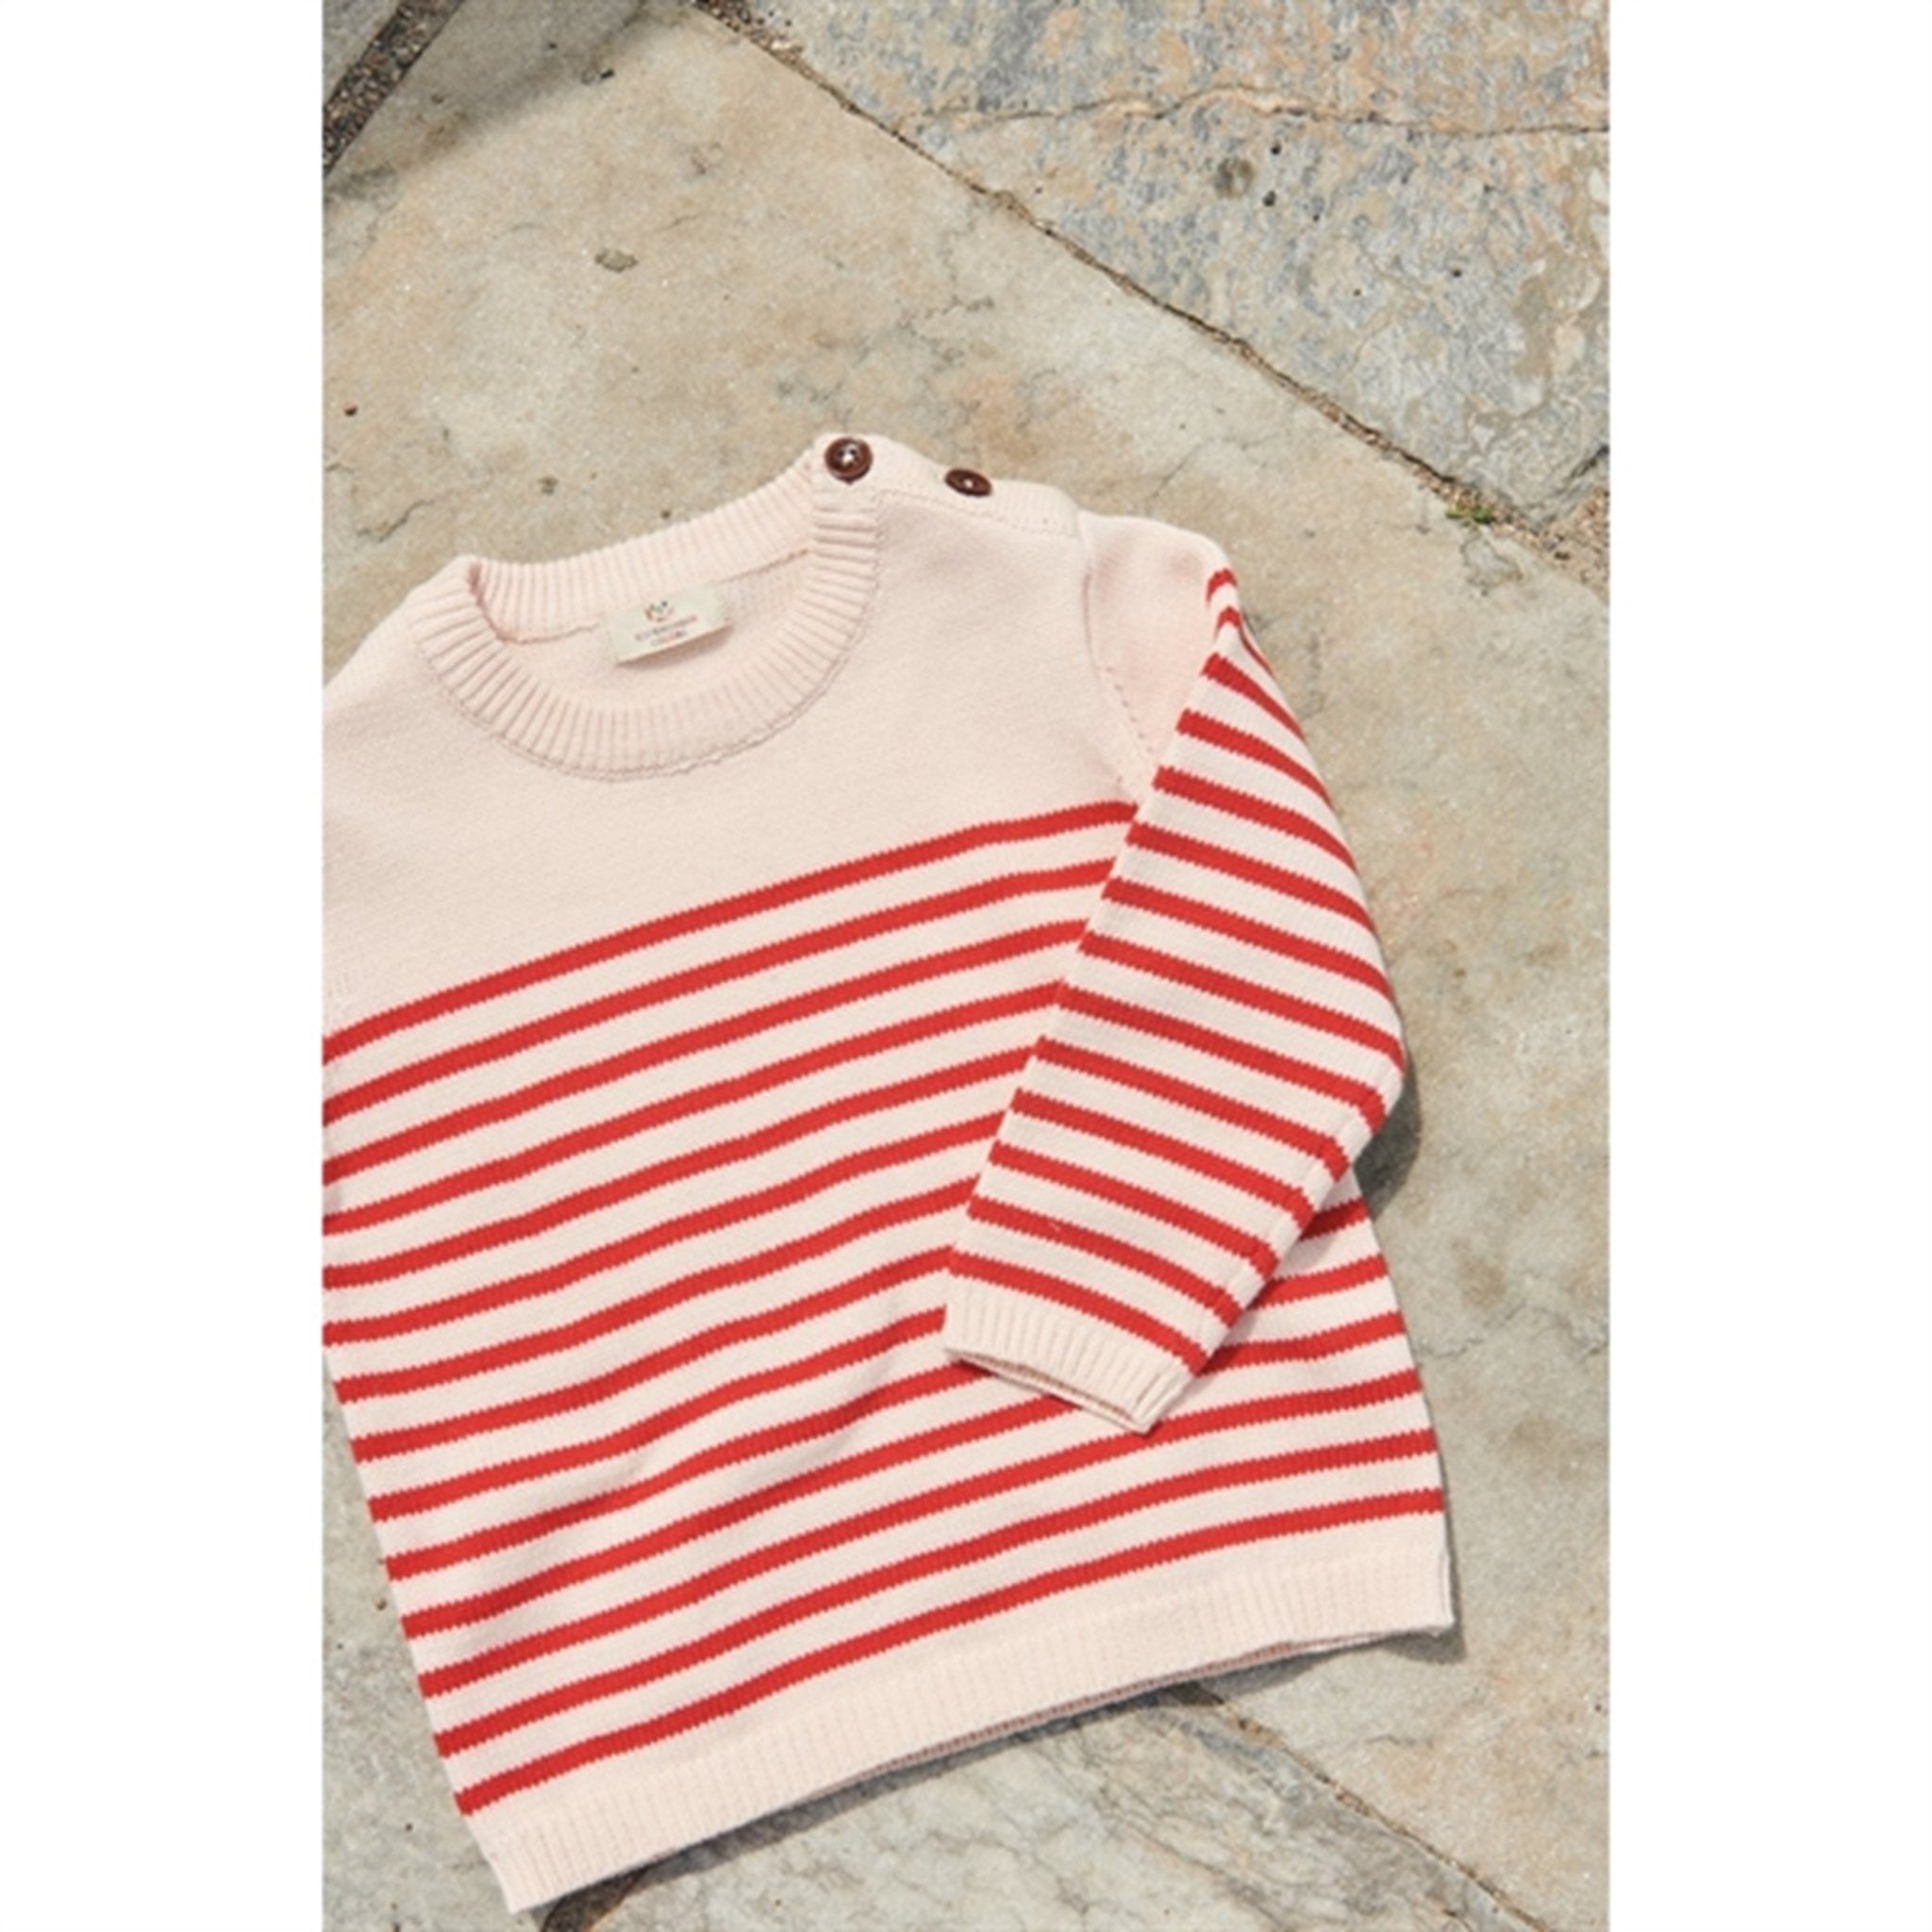 Copenhagen Colors Dusty Rose/Red Comb. Strik Sailor Stripe Sweater 6